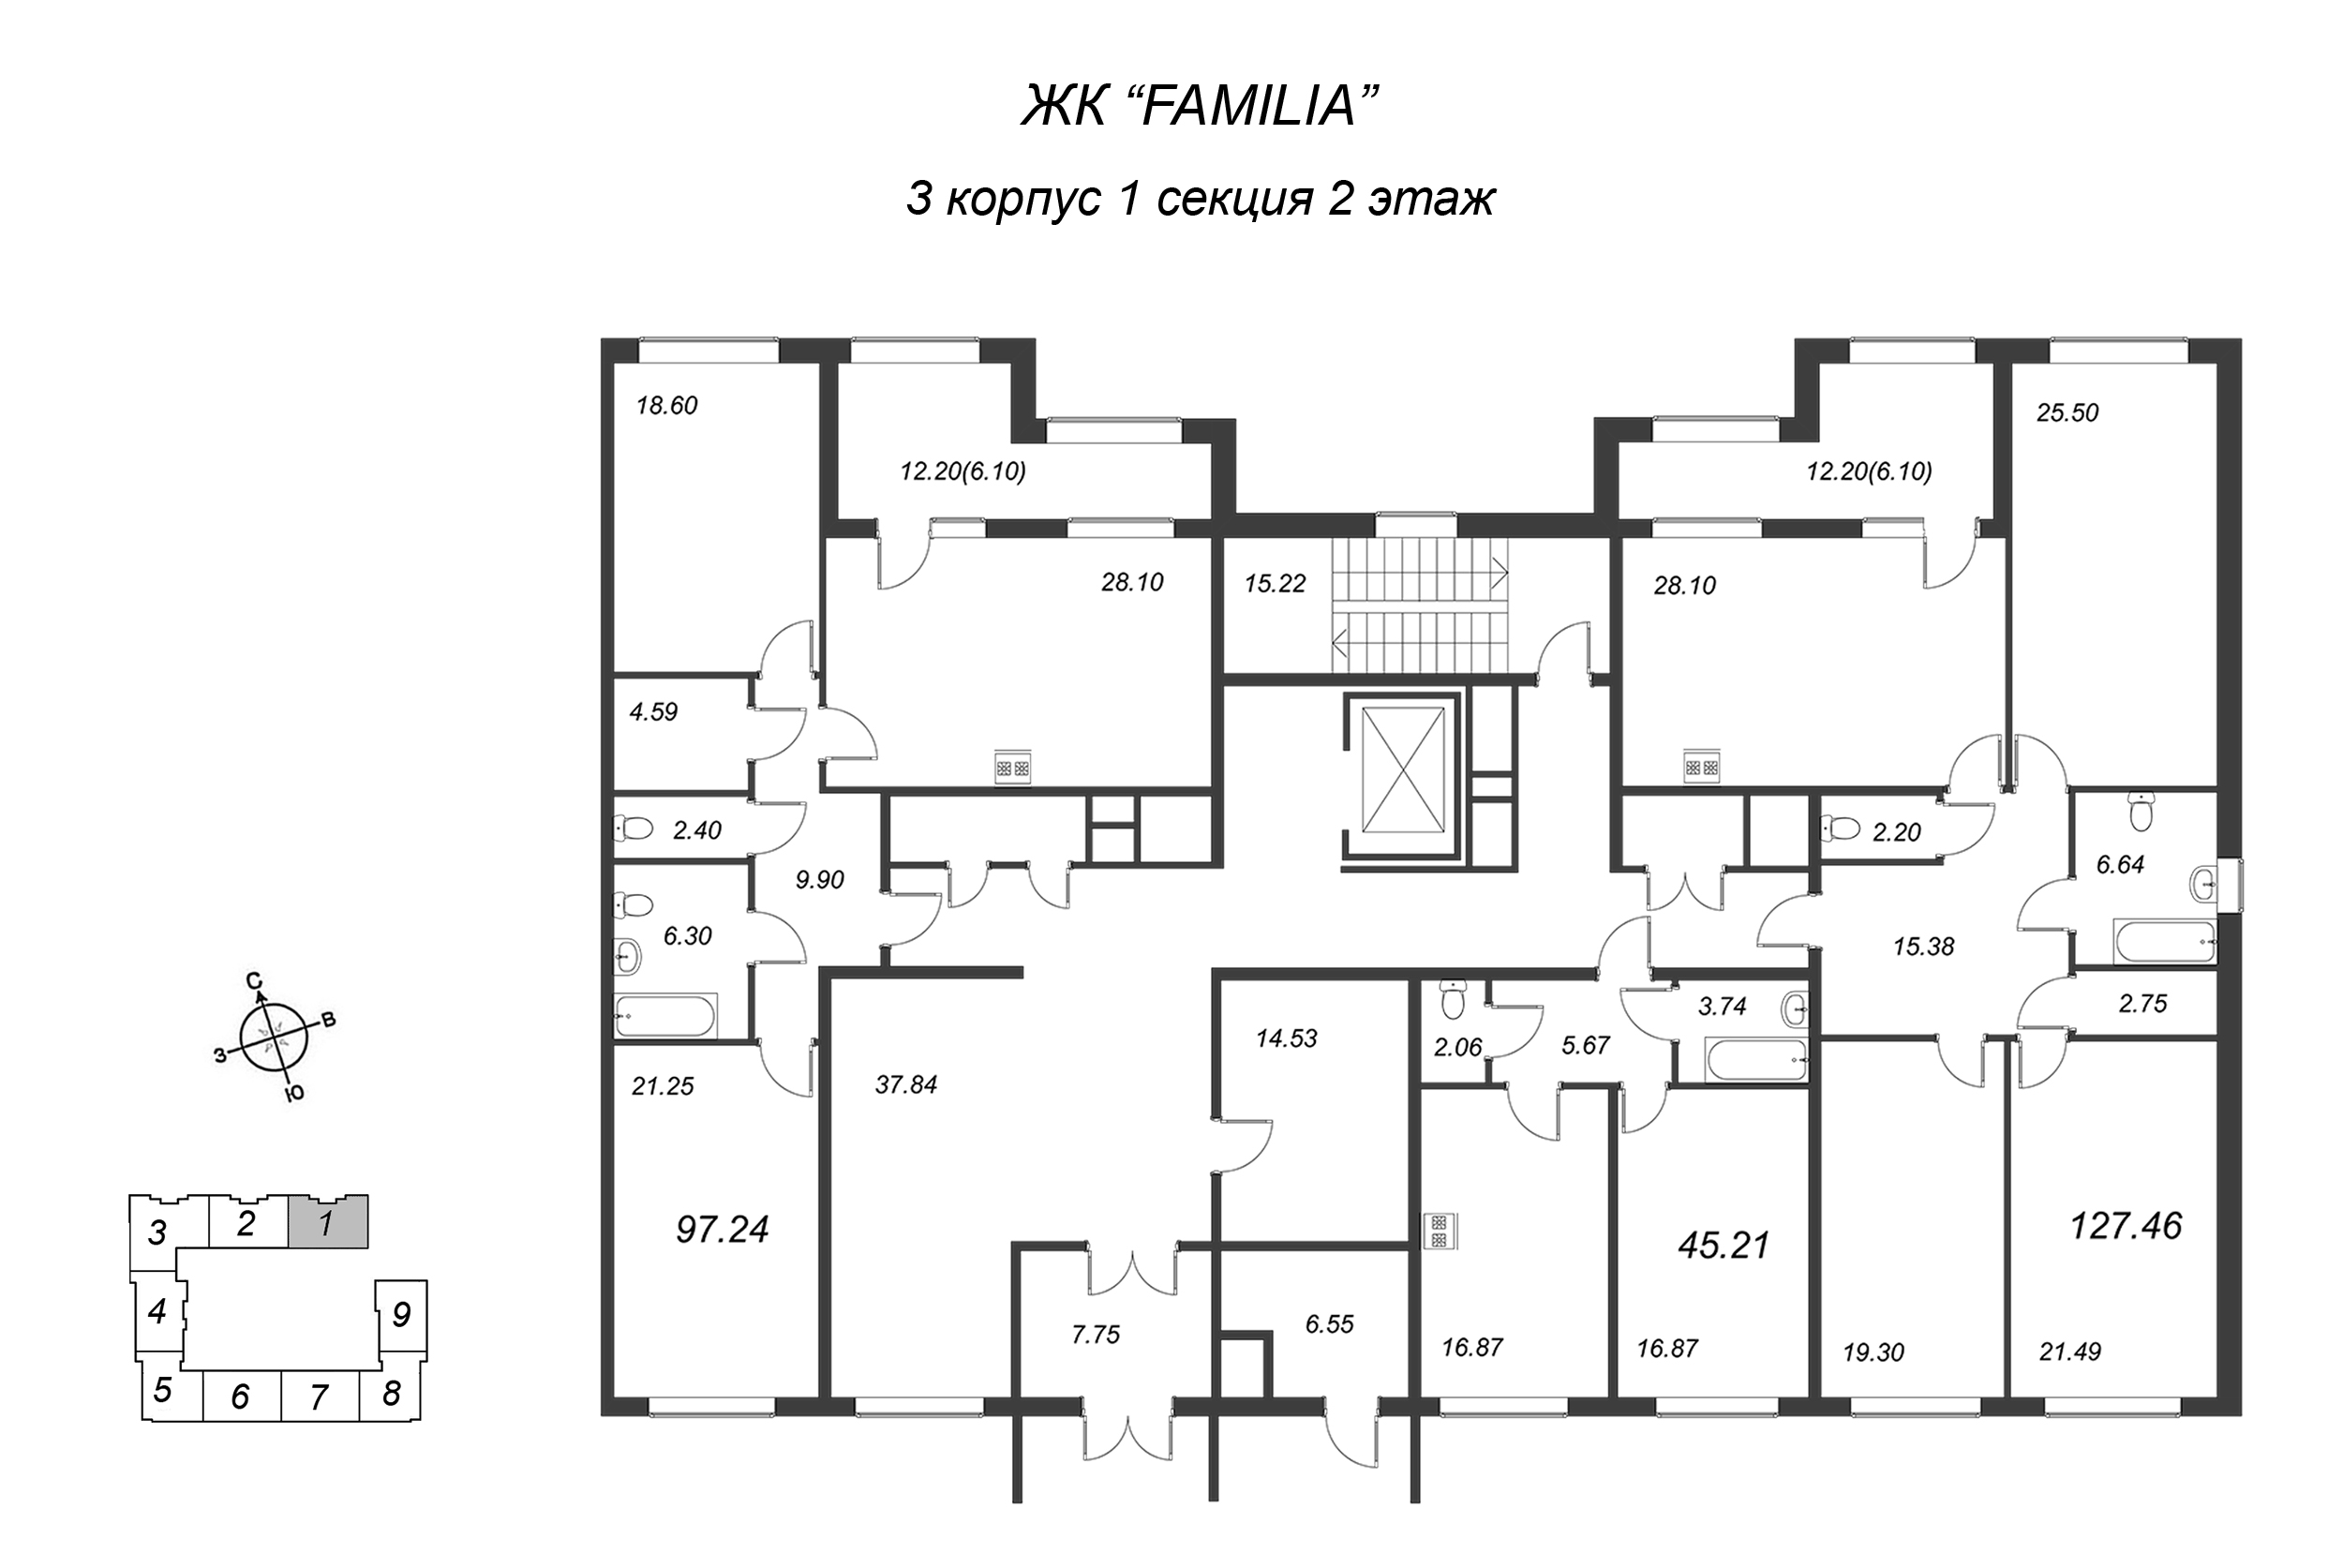 4-комнатная (Евро) квартира, 127.3 м² в ЖК "FAMILIA" - планировка этажа